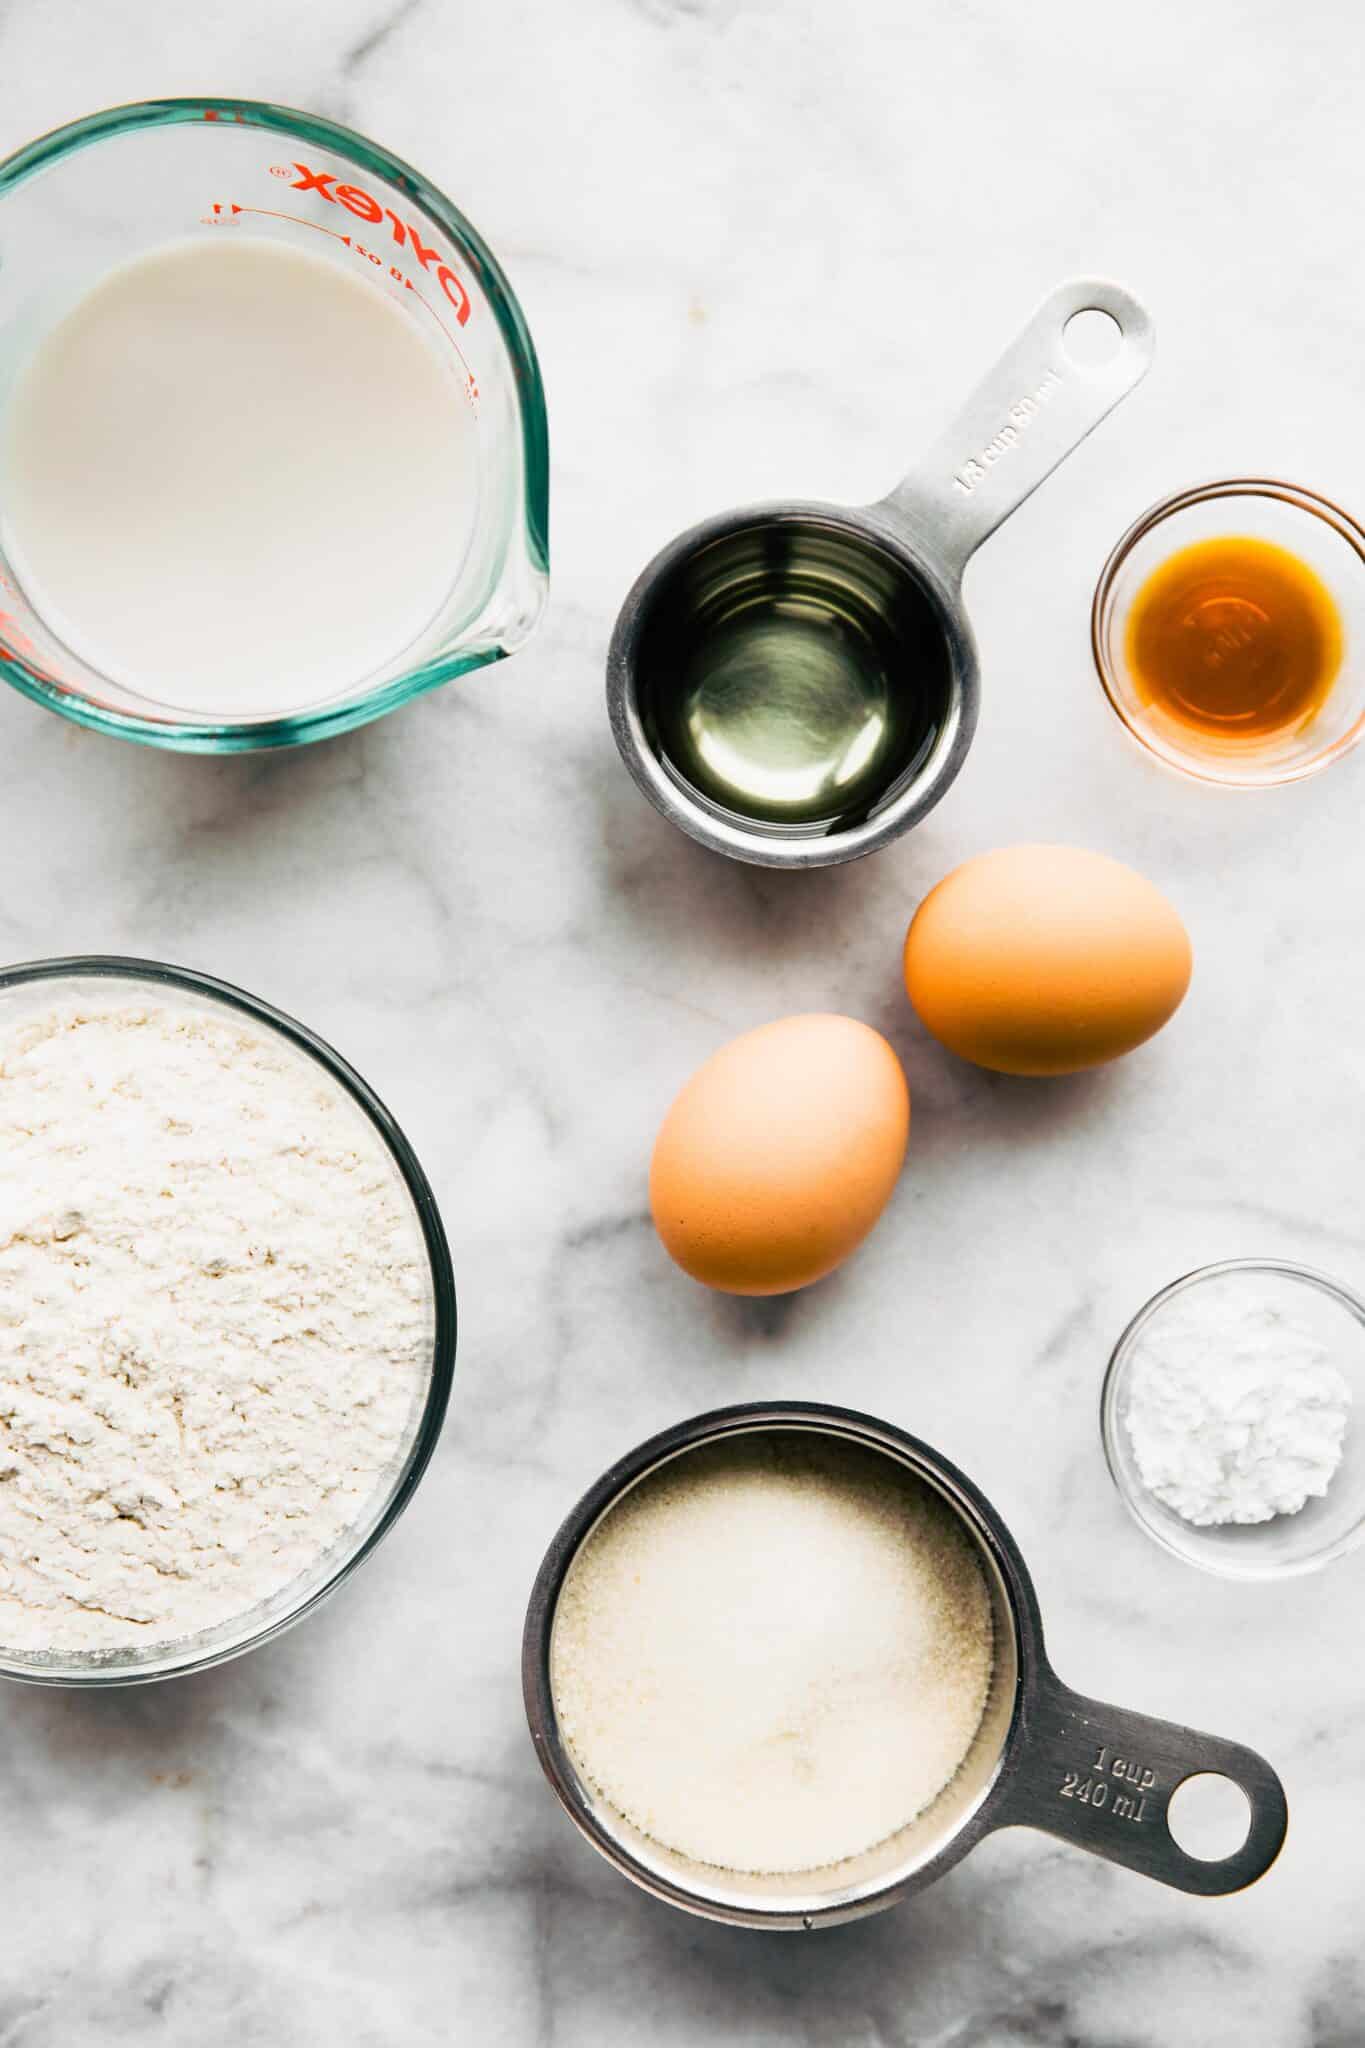 Gluten free flour, monk fruit sweetener, eggs, oil, and vanilla for gluten free cupcakes.